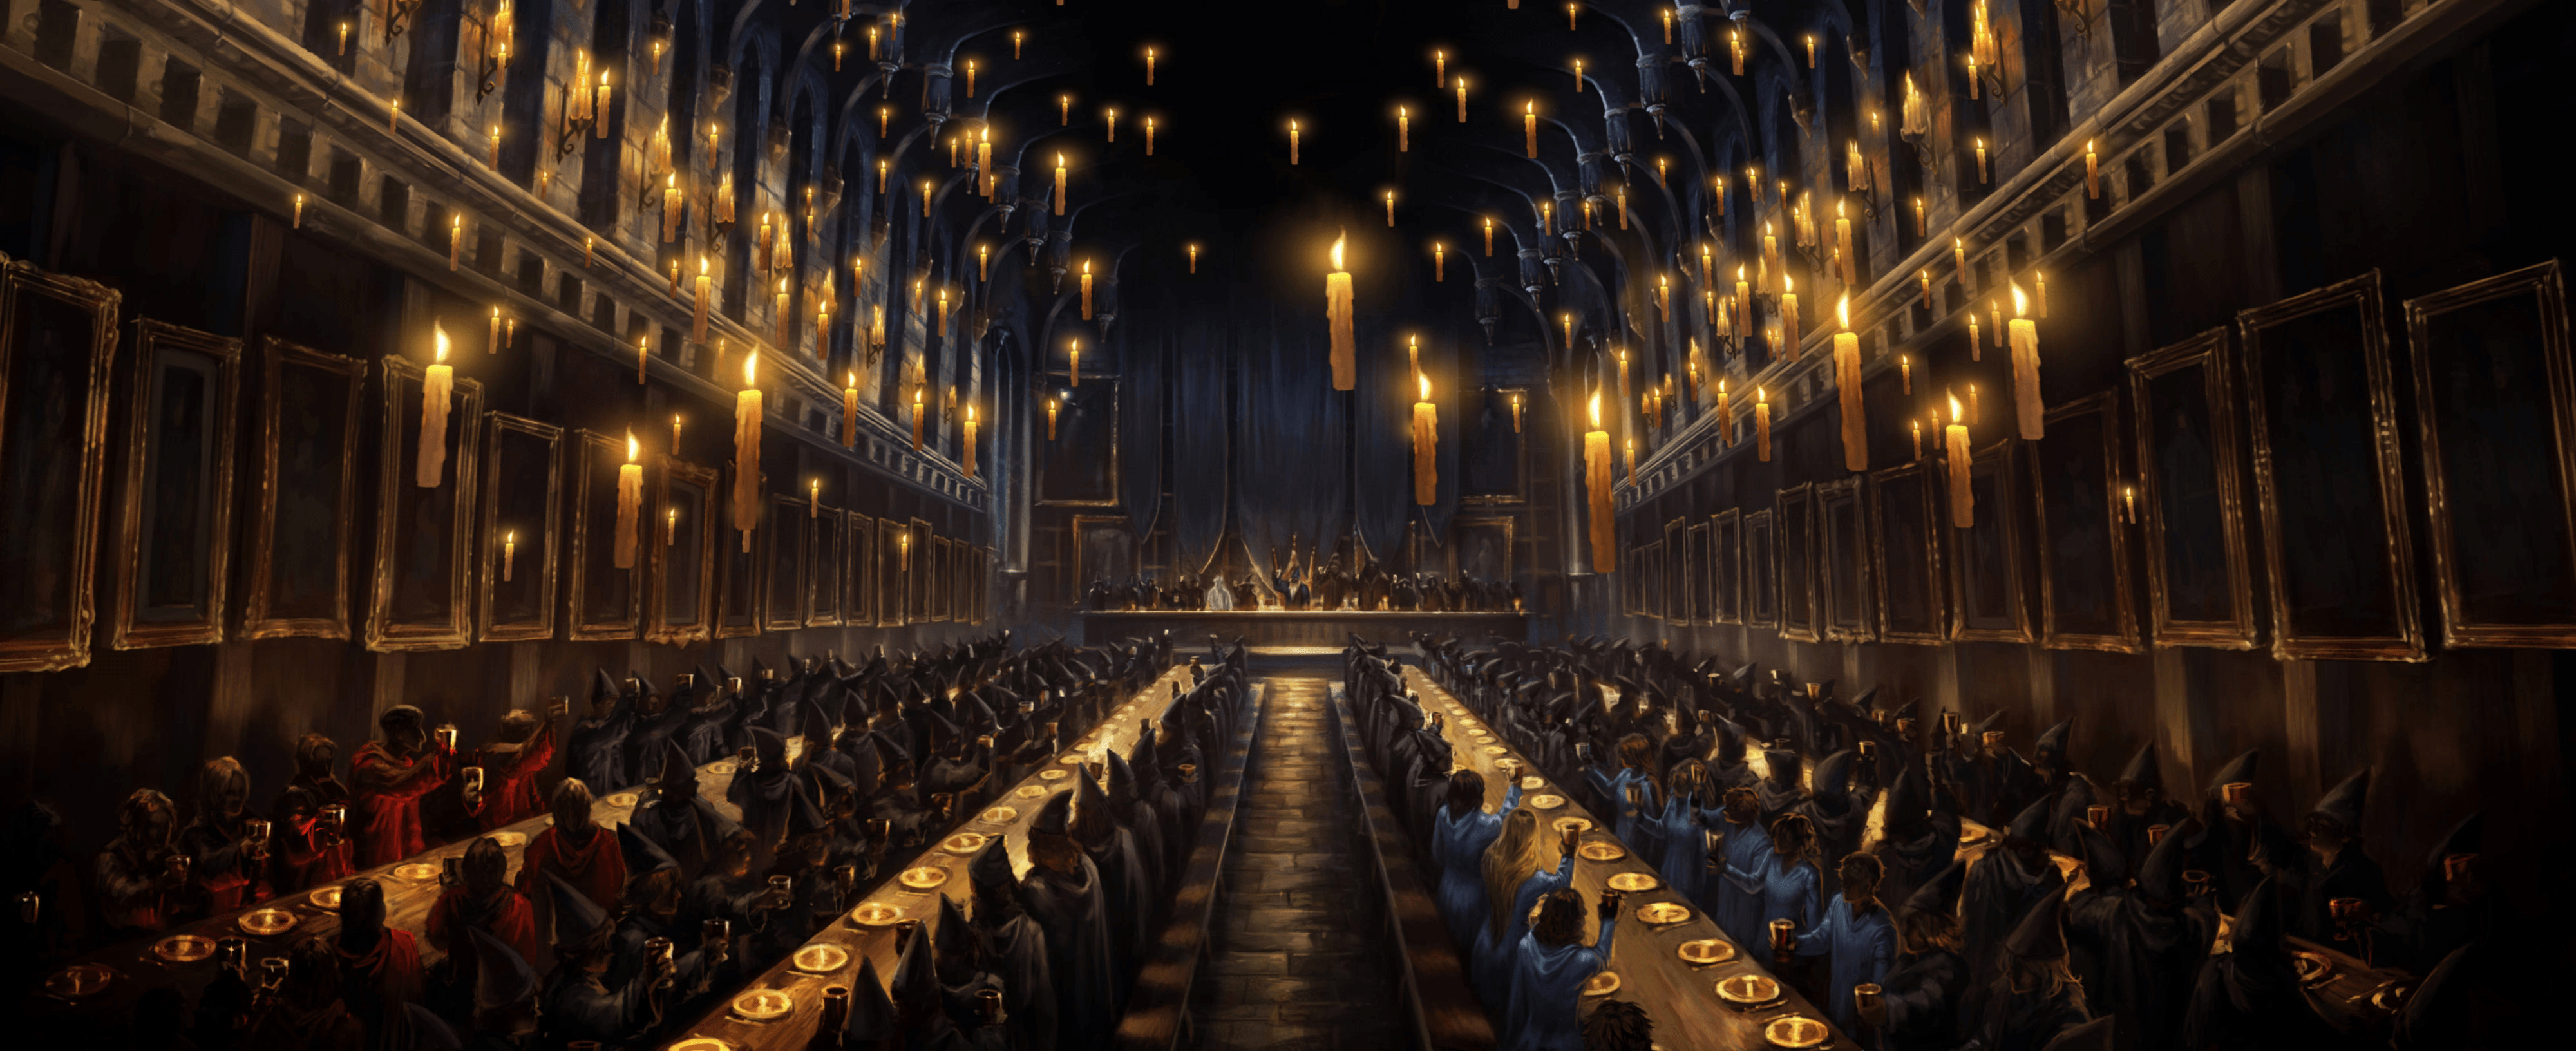 Memorial feast to Cedric Diggory